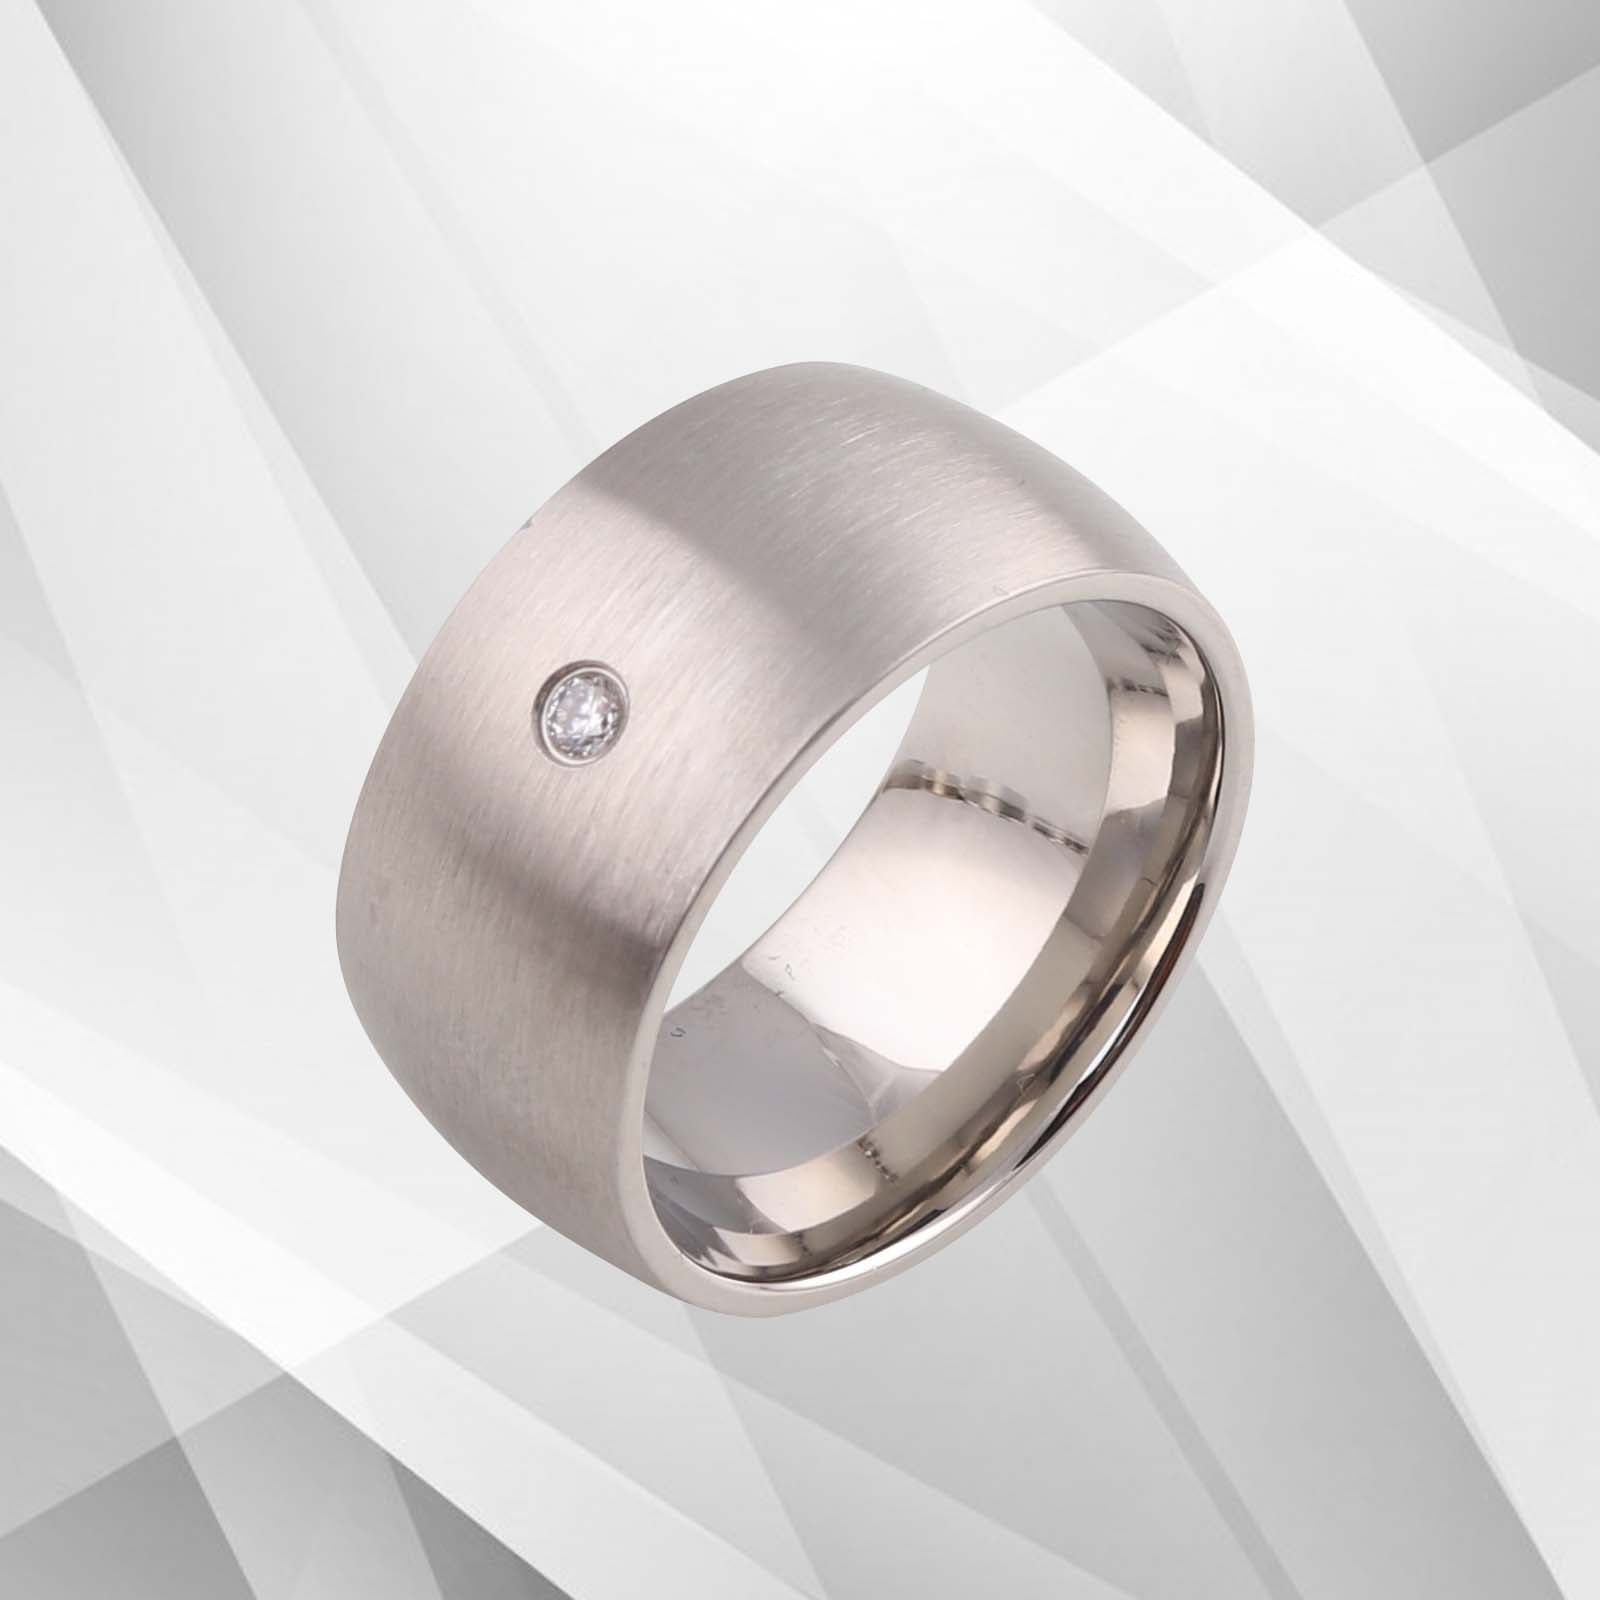 10mm Titanium CZ Diamond Wedding Band Ring - 18Ct White Gold Finish, Comfort Fit, Women's Anniversary Gift (NDFM15A) Bijou Her